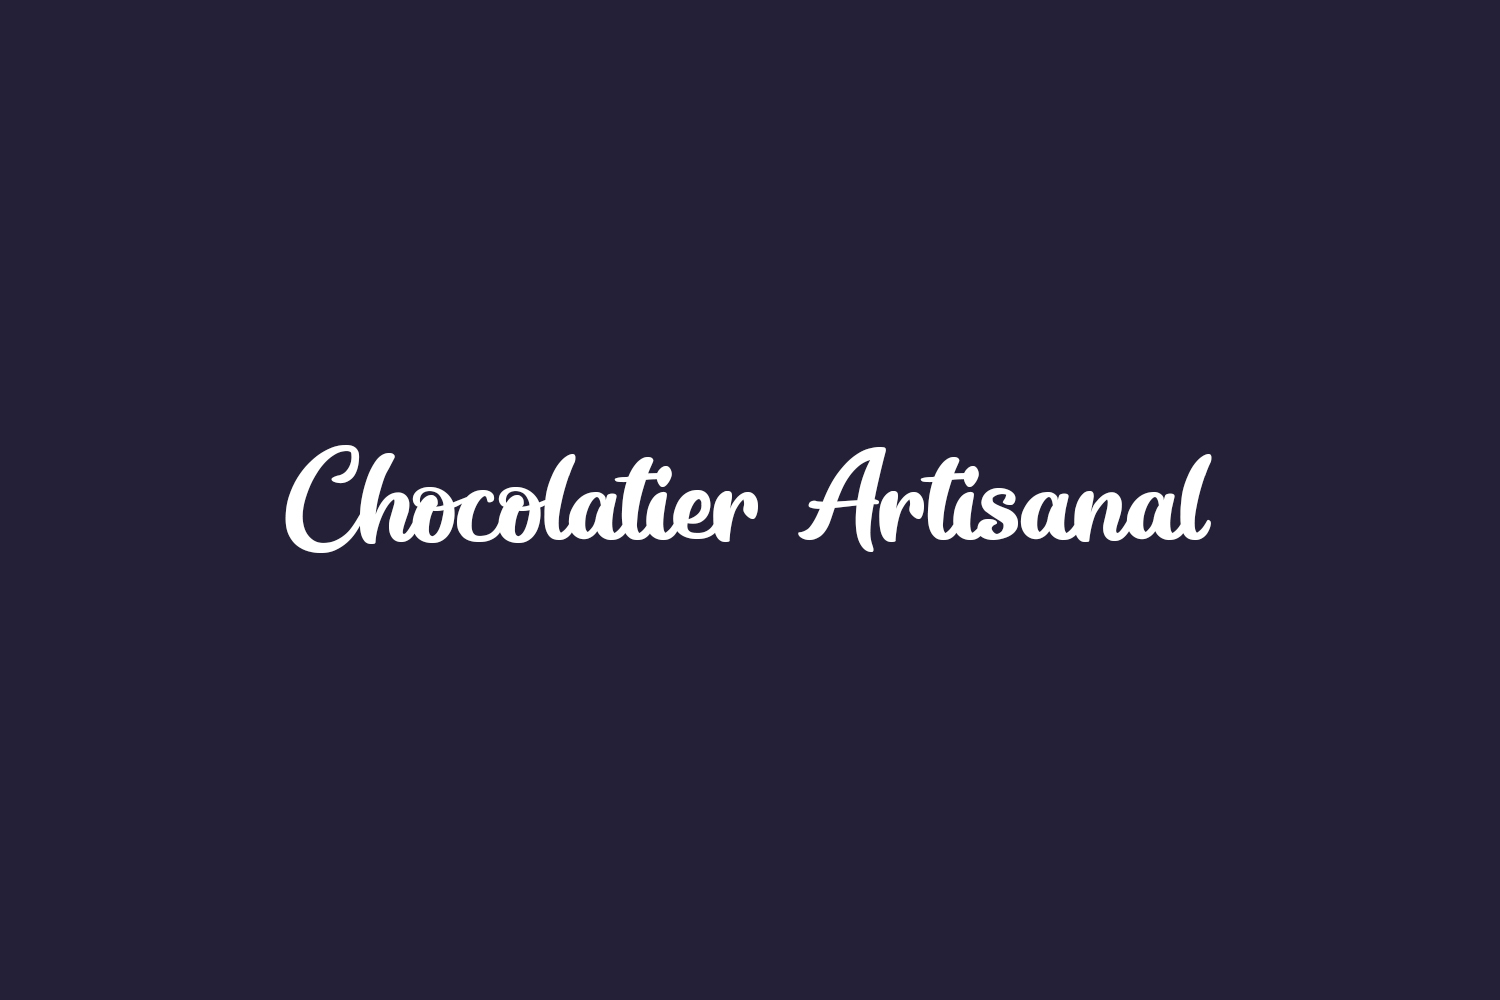 Chocolatier Artisanal Free Font